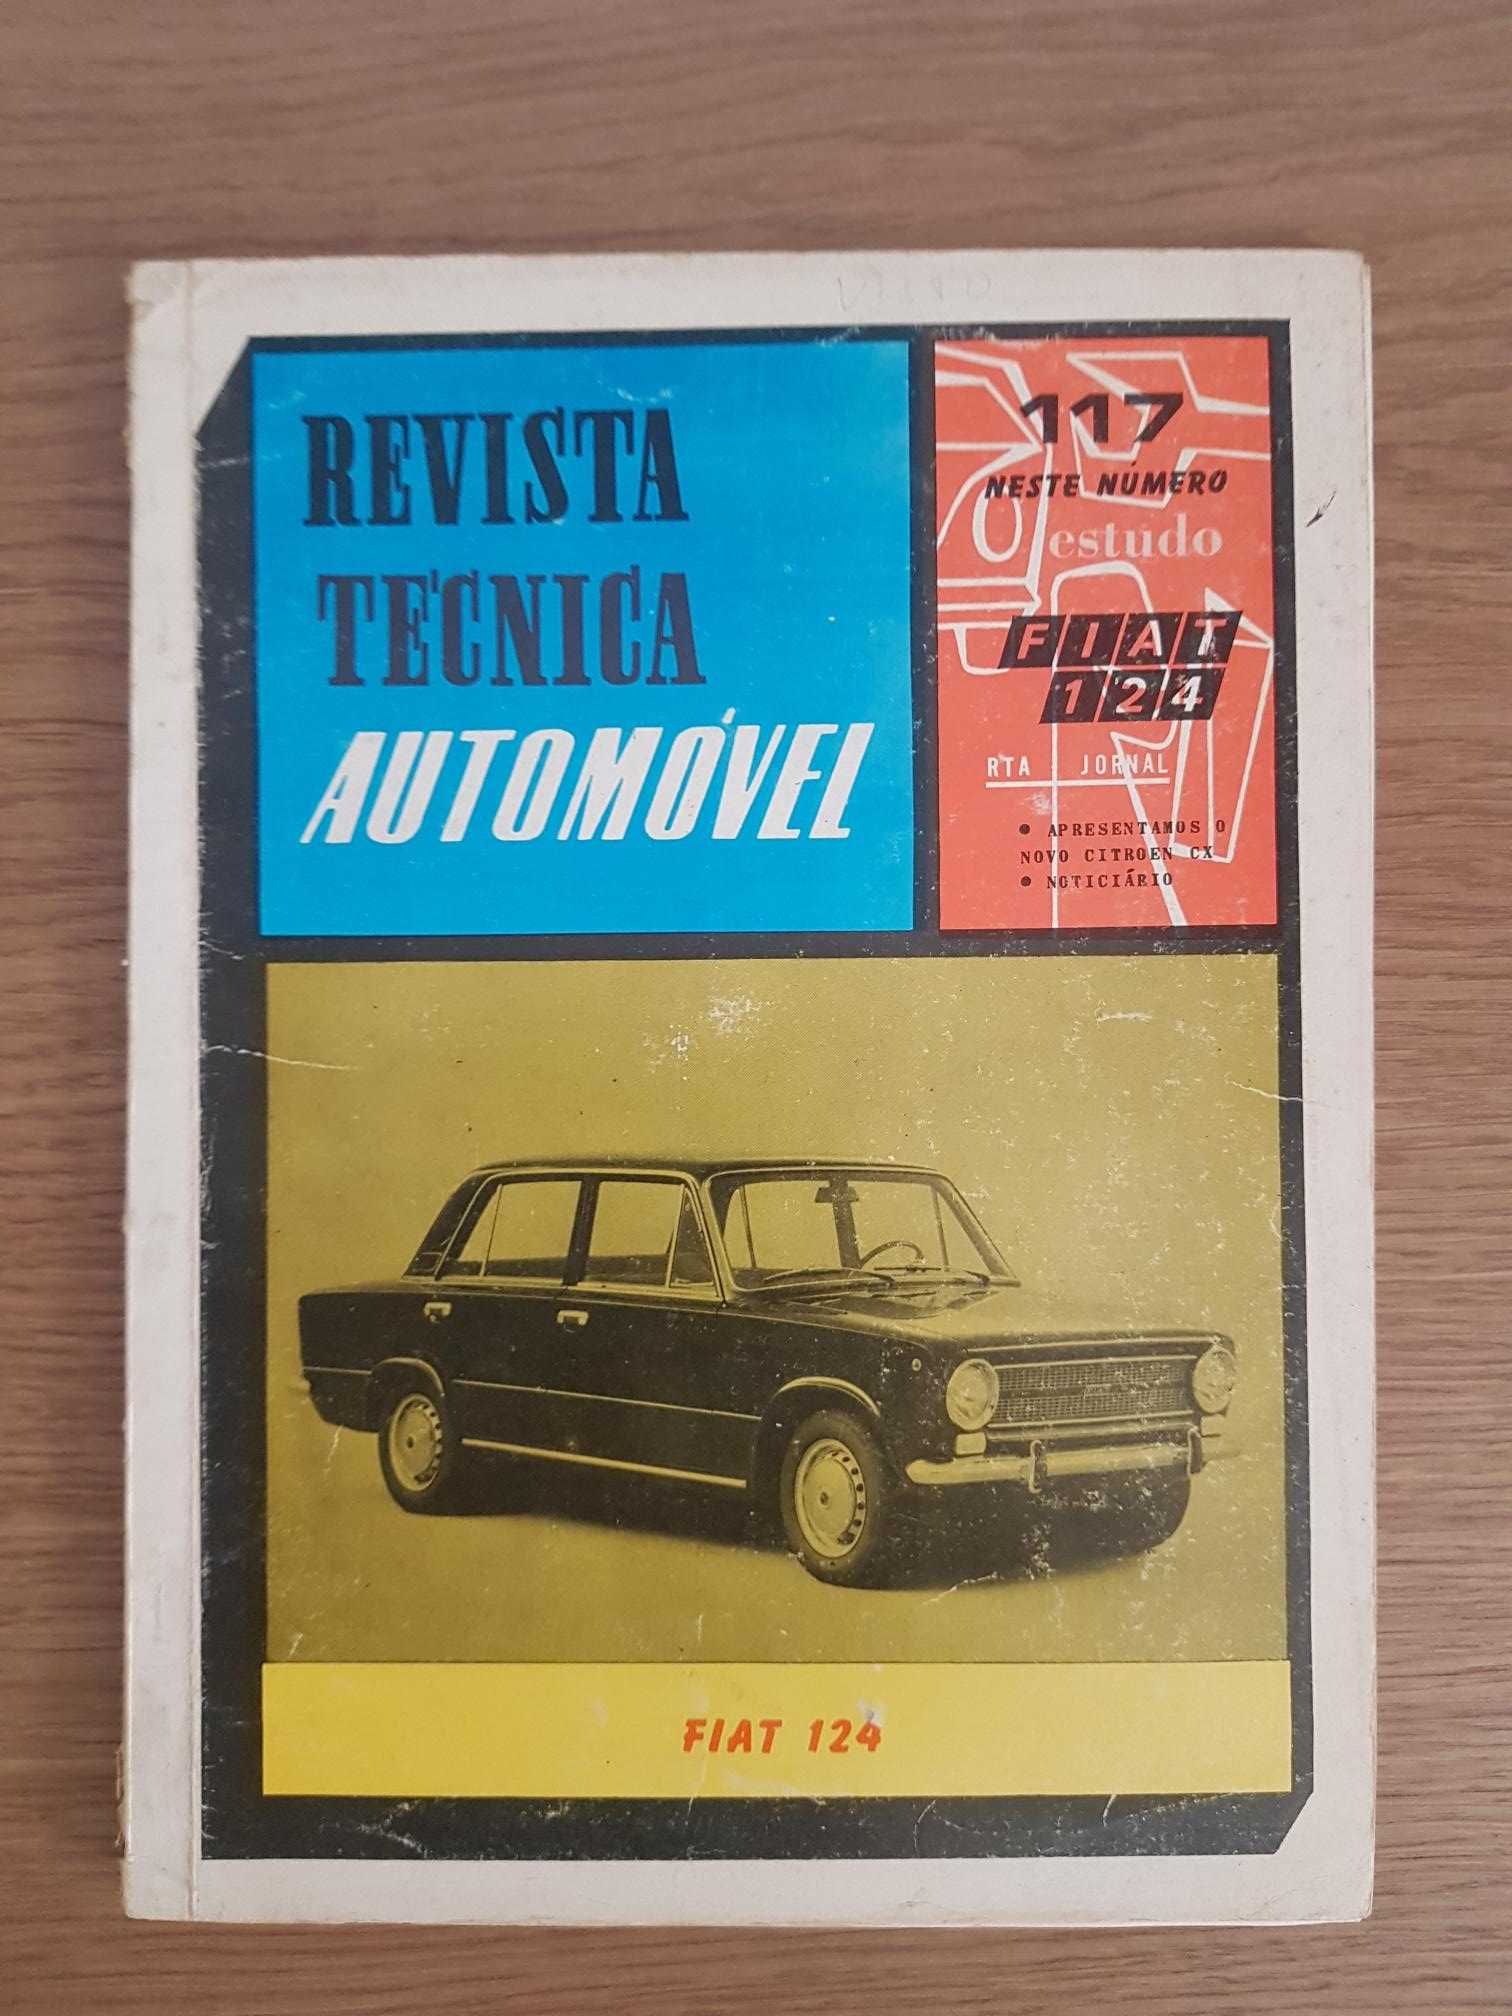 Revista Técnica Automóvel Nº117 (Ano:1974)